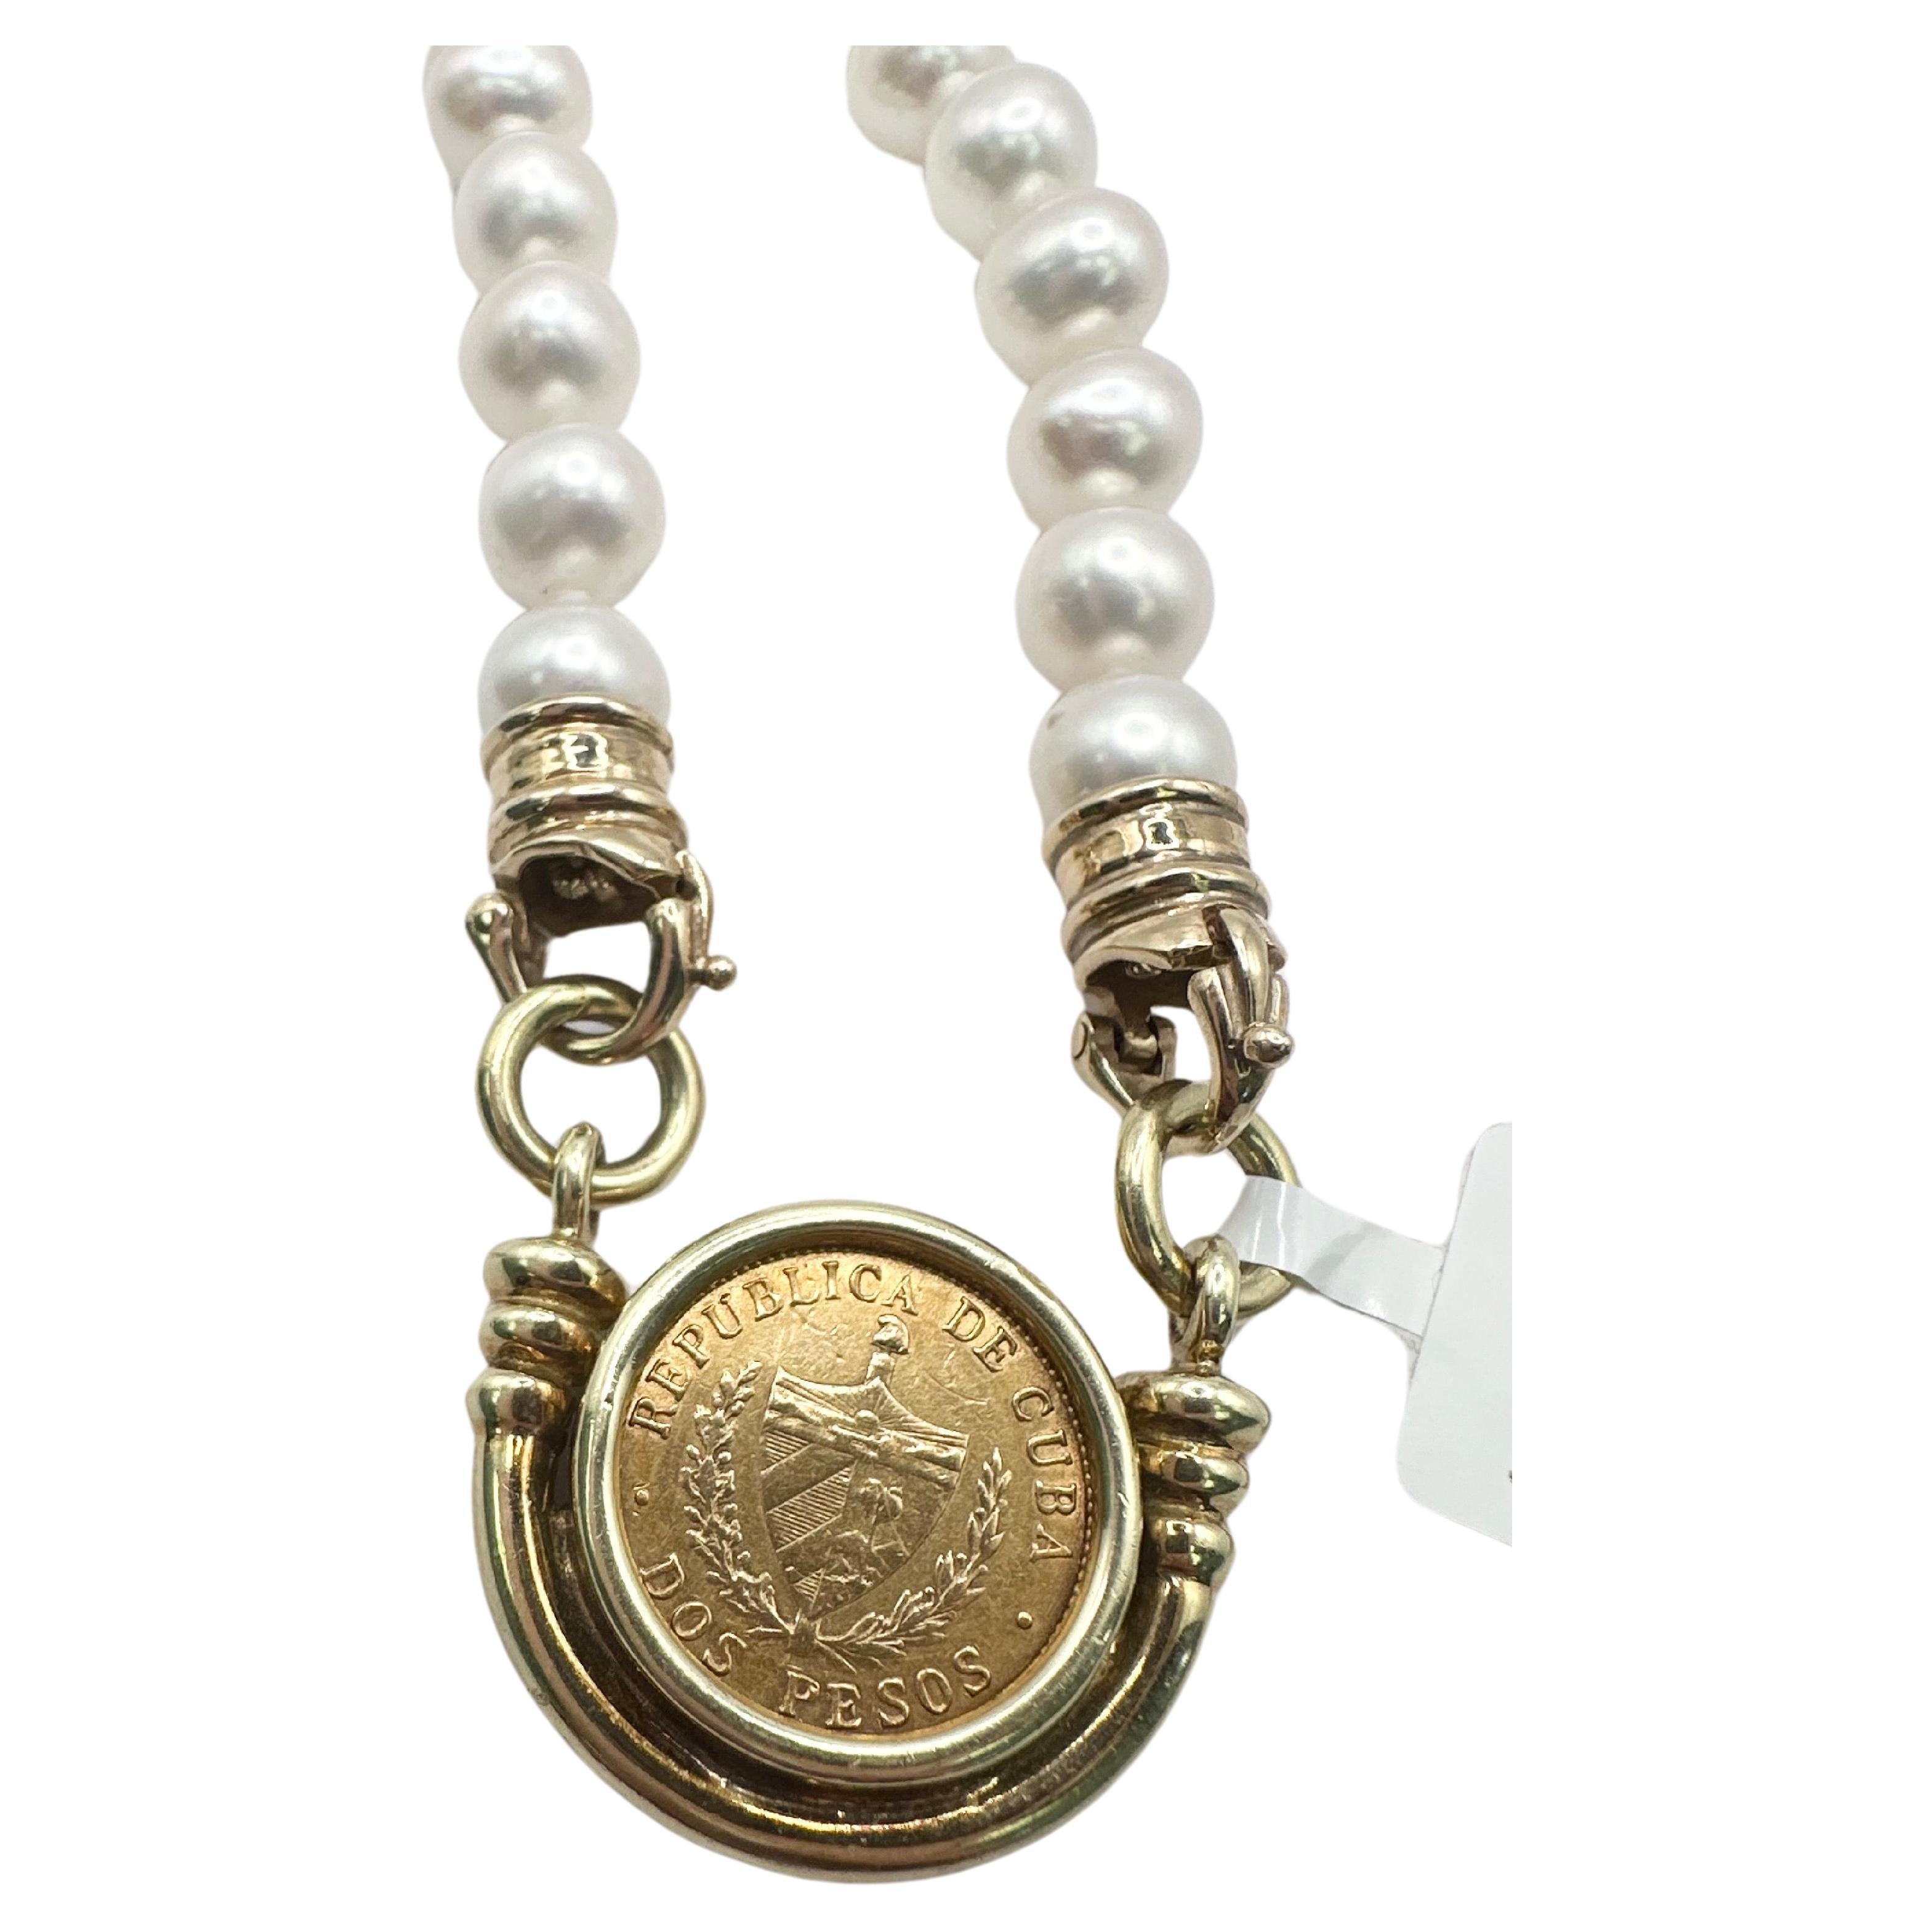 2 pesos necklace 14KT solid gold coin necklace republica de cuba 17 inches